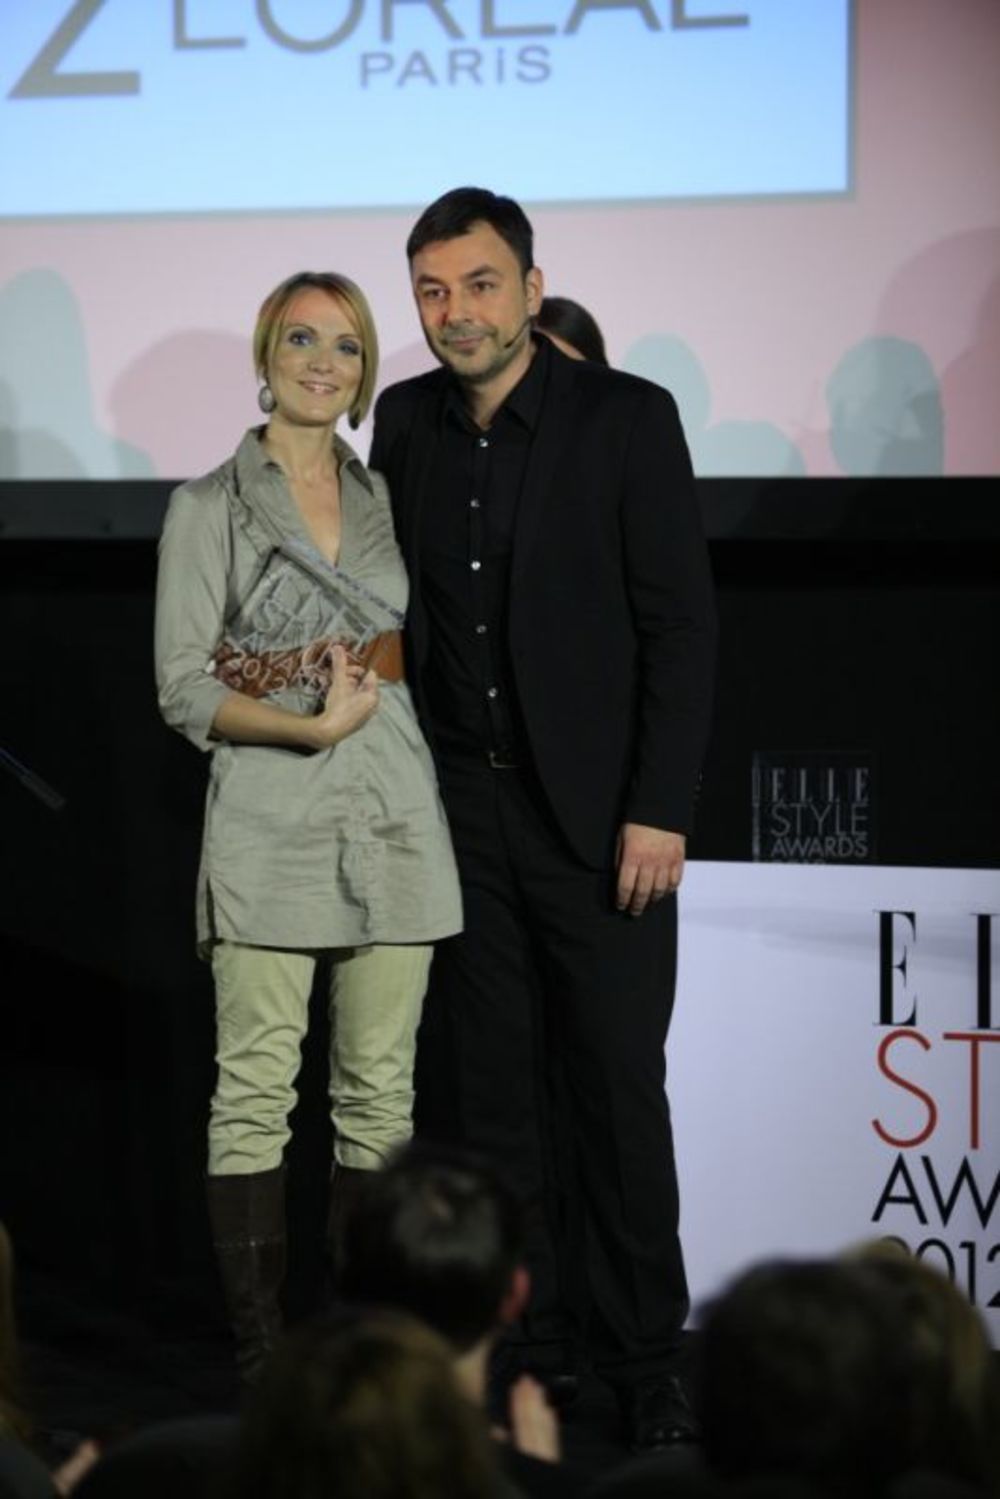 Magazin ELLE dodelio je prvi put u Srbiji renomirana svetska priznanja za prepoznatljiv stil - ELLE Style awards 2012, u saradnji sa L’Oréal Paris. U ekskluzivnoj sali Jugoslovenske kinoteke, koja je premijerno otvorena, ELLE Style awards 2012 dodeljene su naj